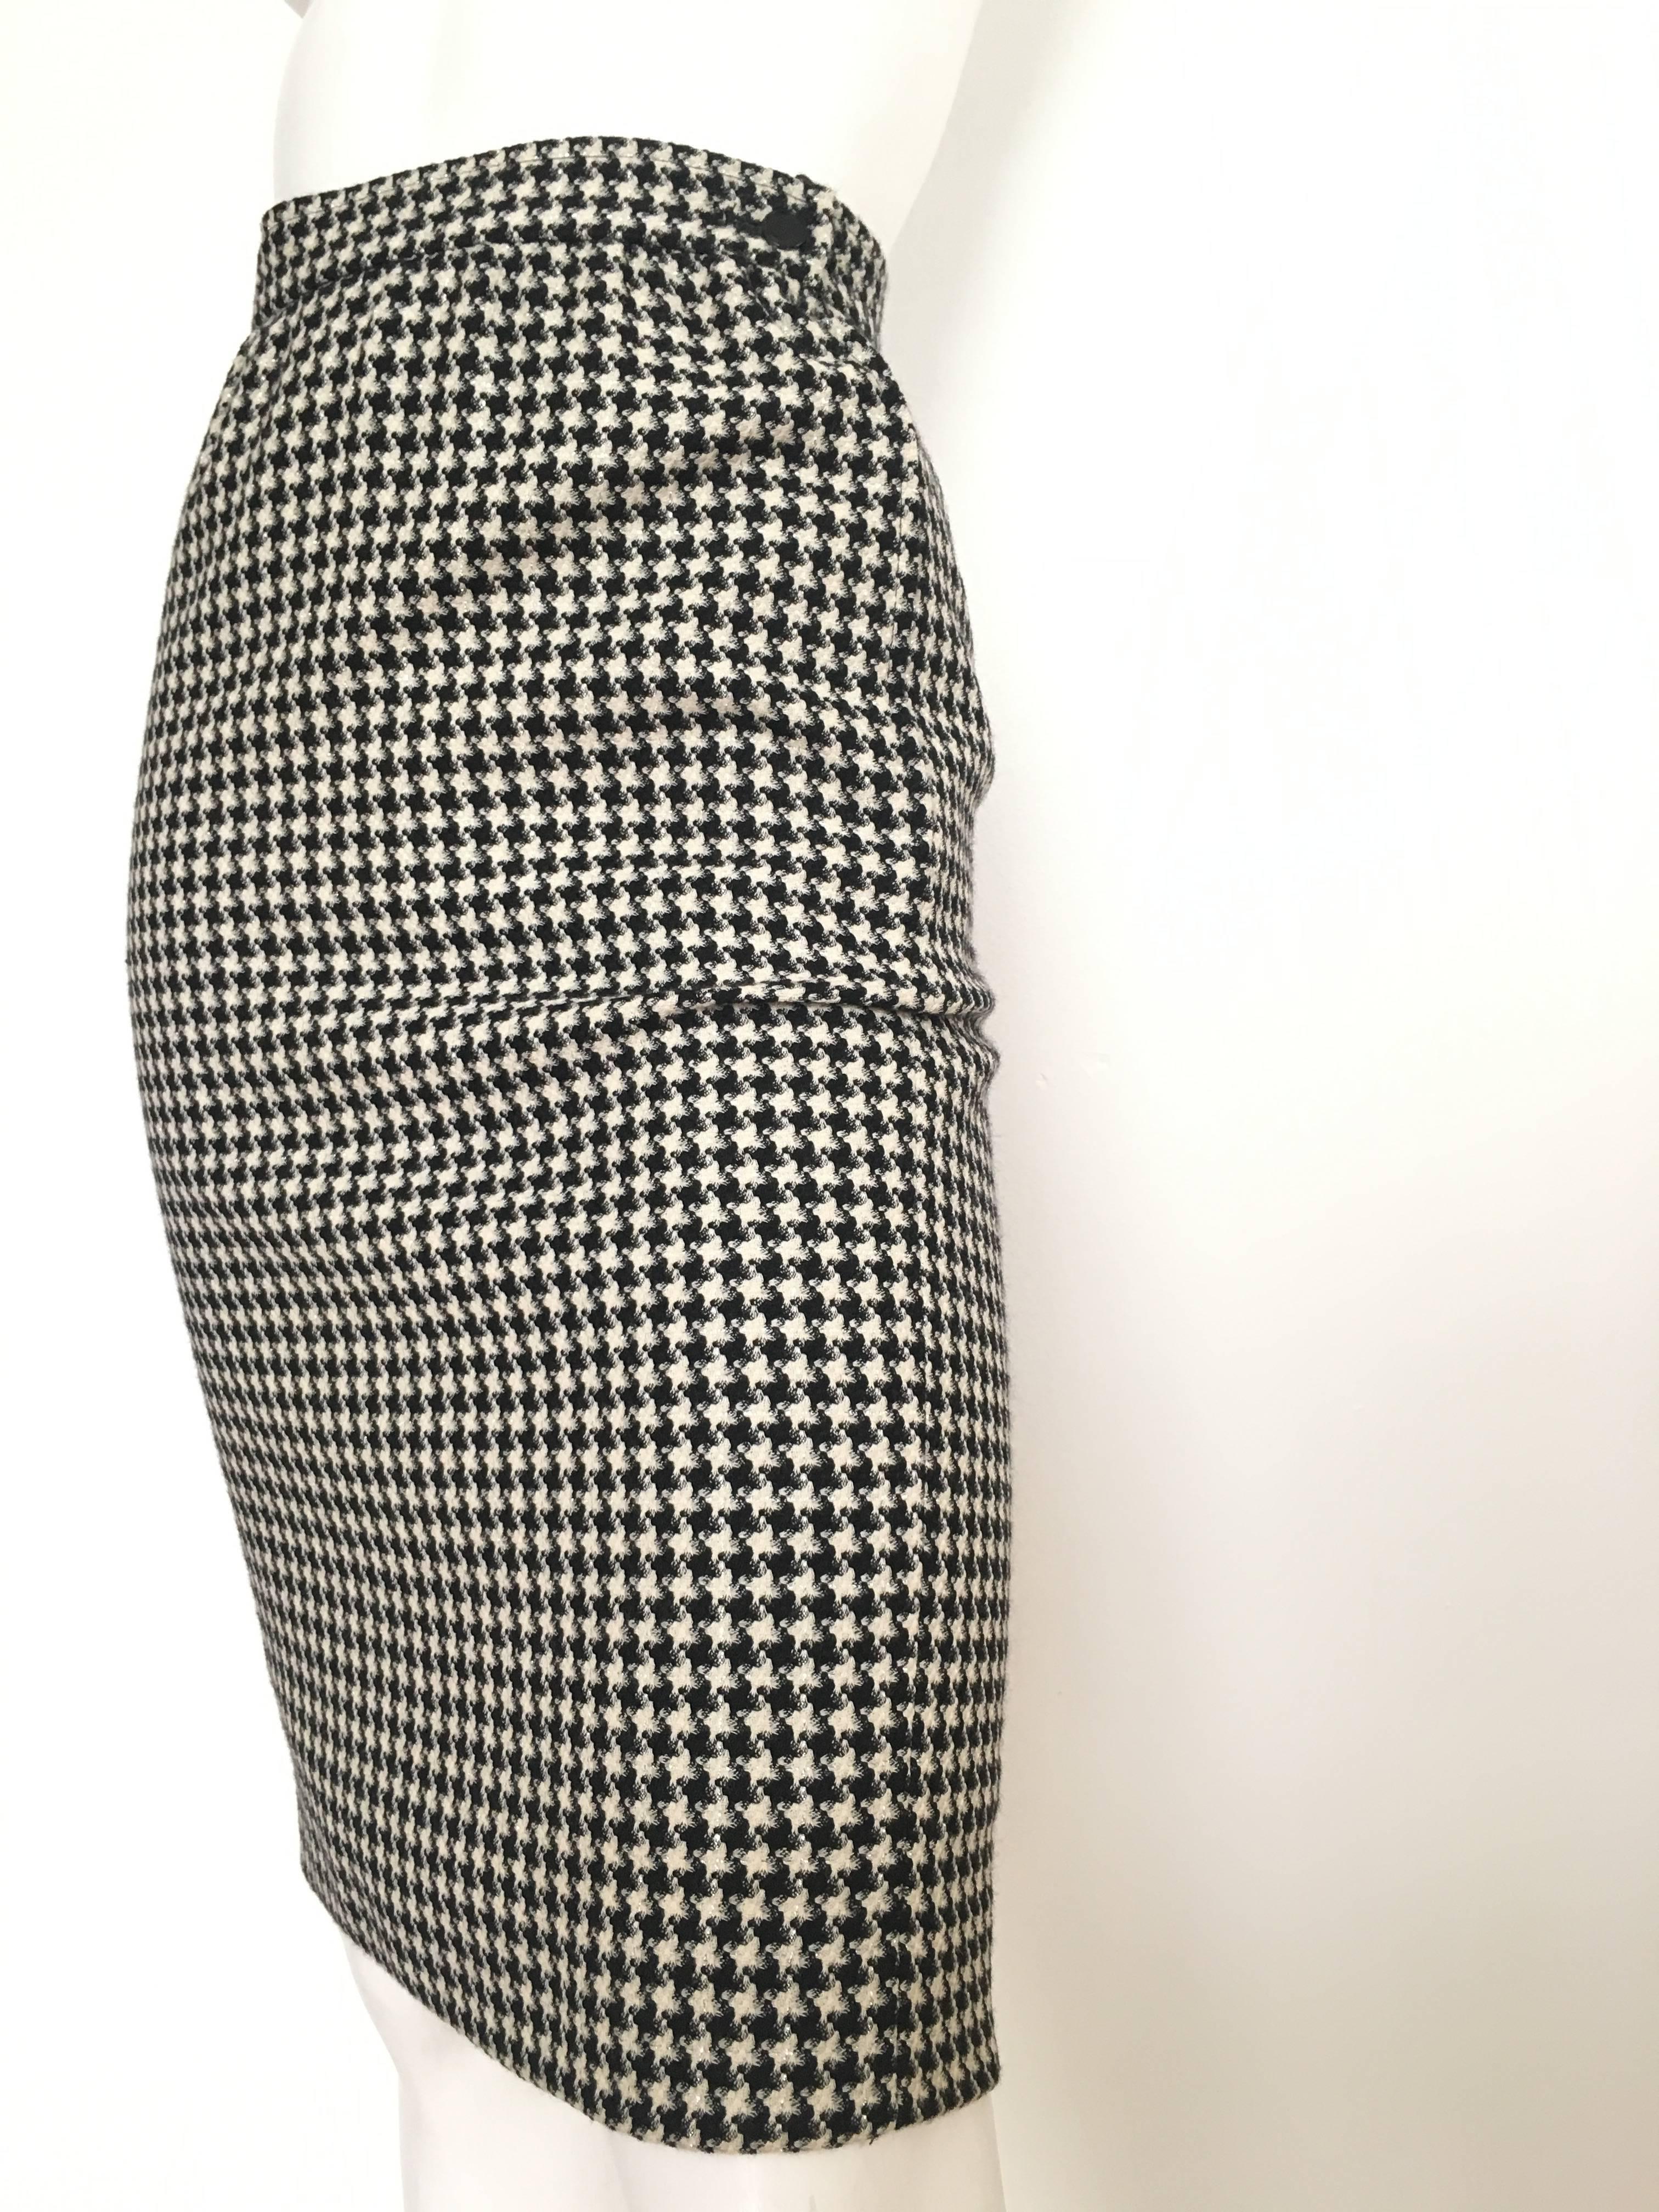 Emanuel Ungaro  Houndstooth Pencil Skirt Size 4. For Sale 2